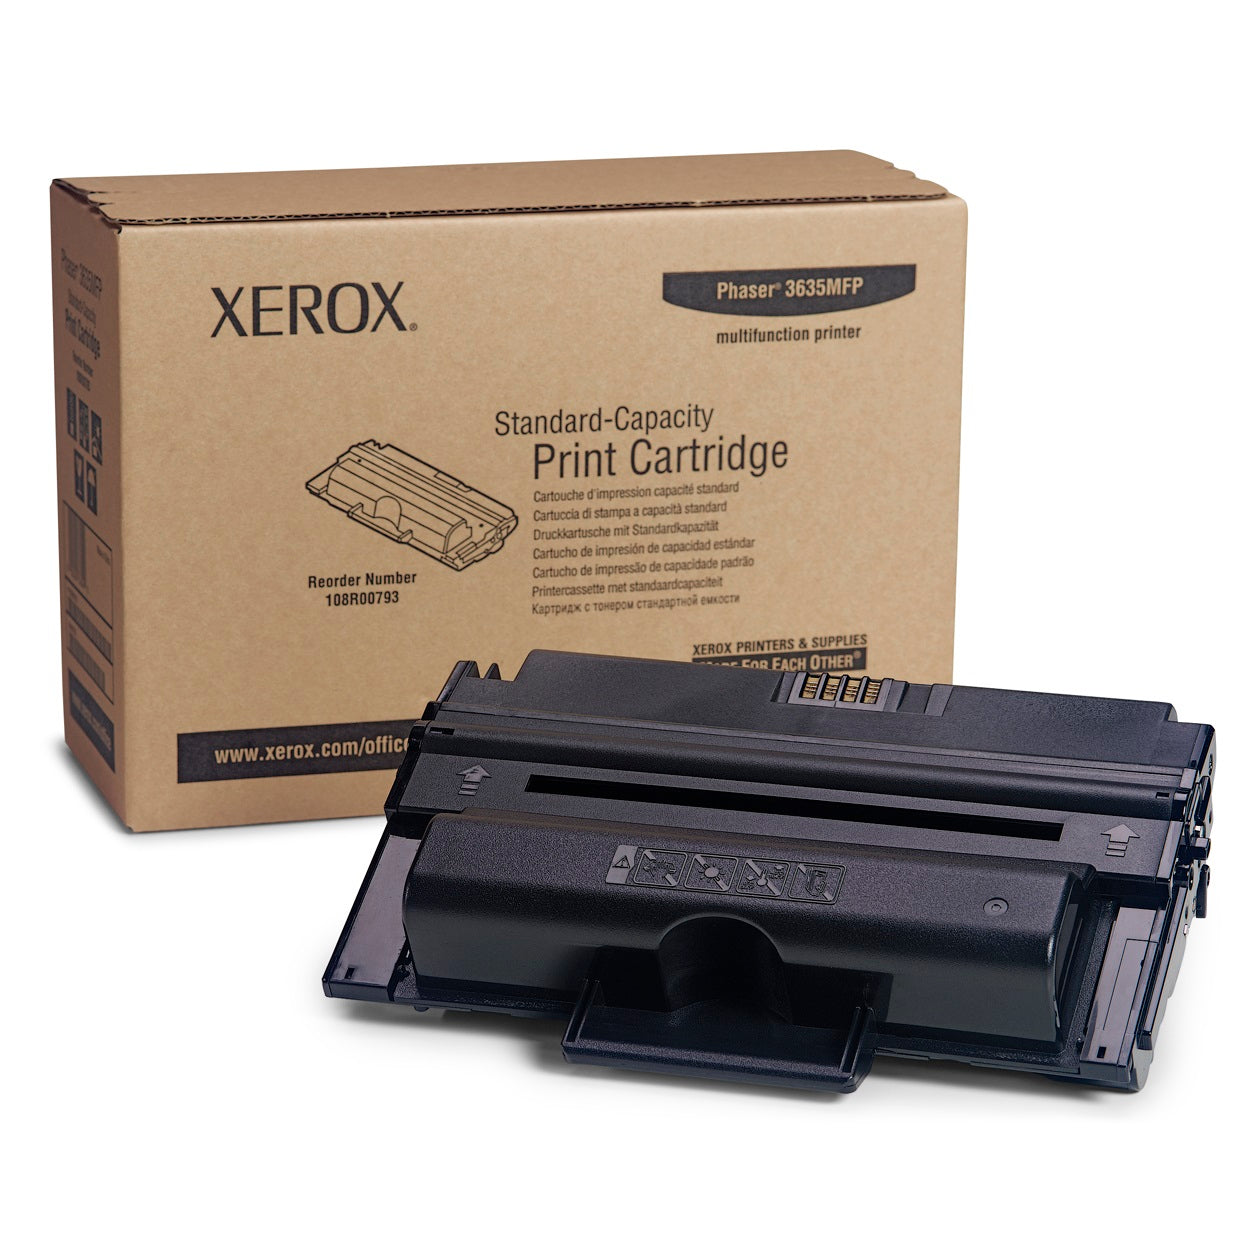 Absolute Toner Xerox 108R00793 Genuine Black Toner Cartridge For Phaser 3635MFP Original Xerox Cartridges